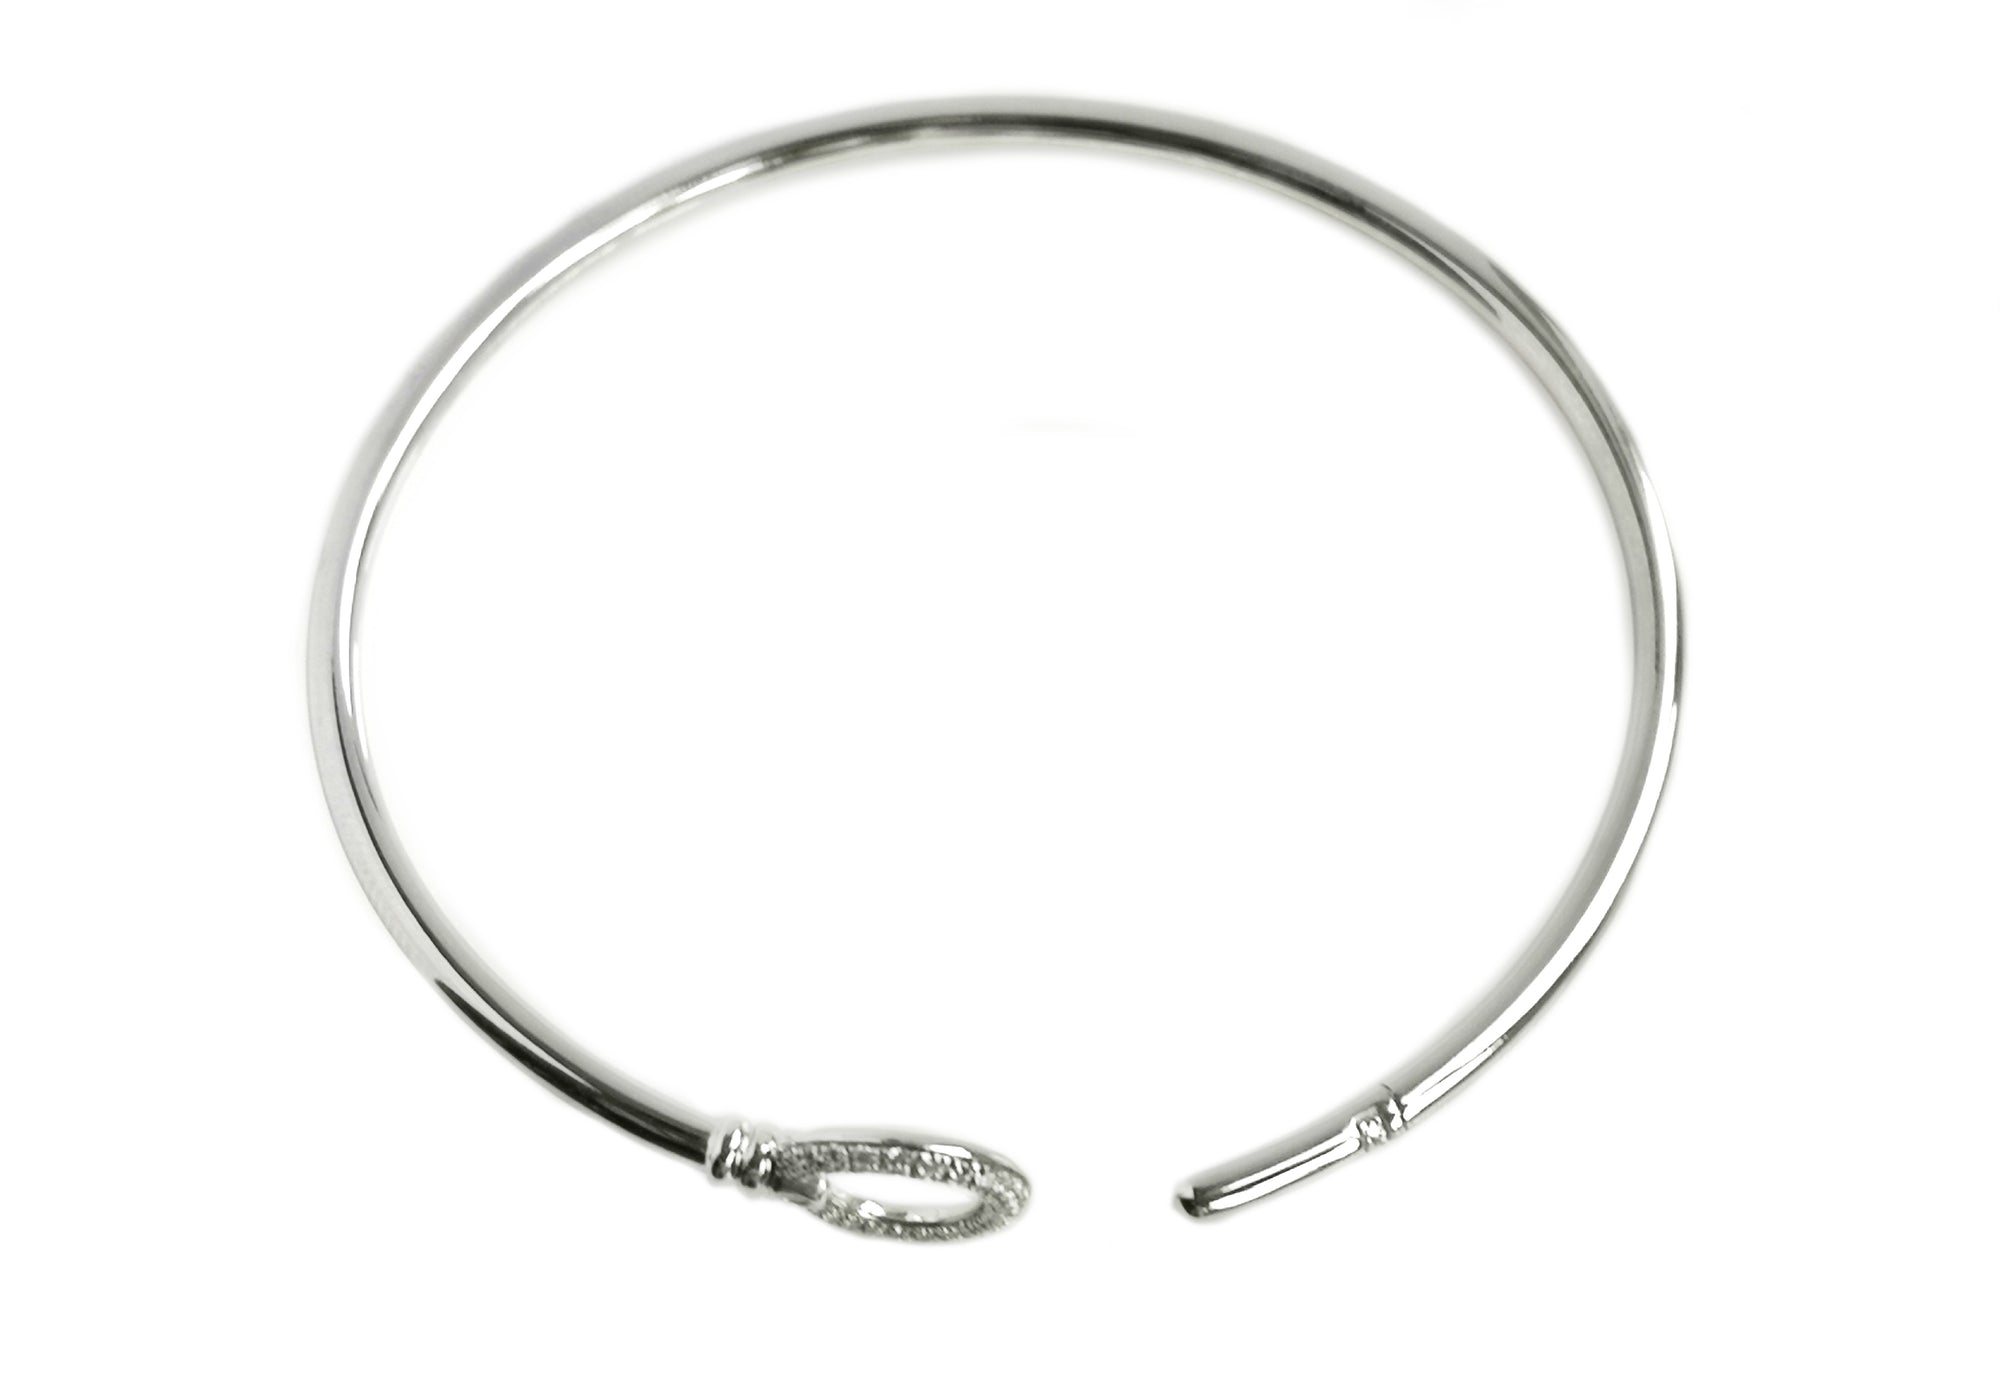 Tiffany & Co. Keys Wire Bracelet in 18k White Gold & Diamonds